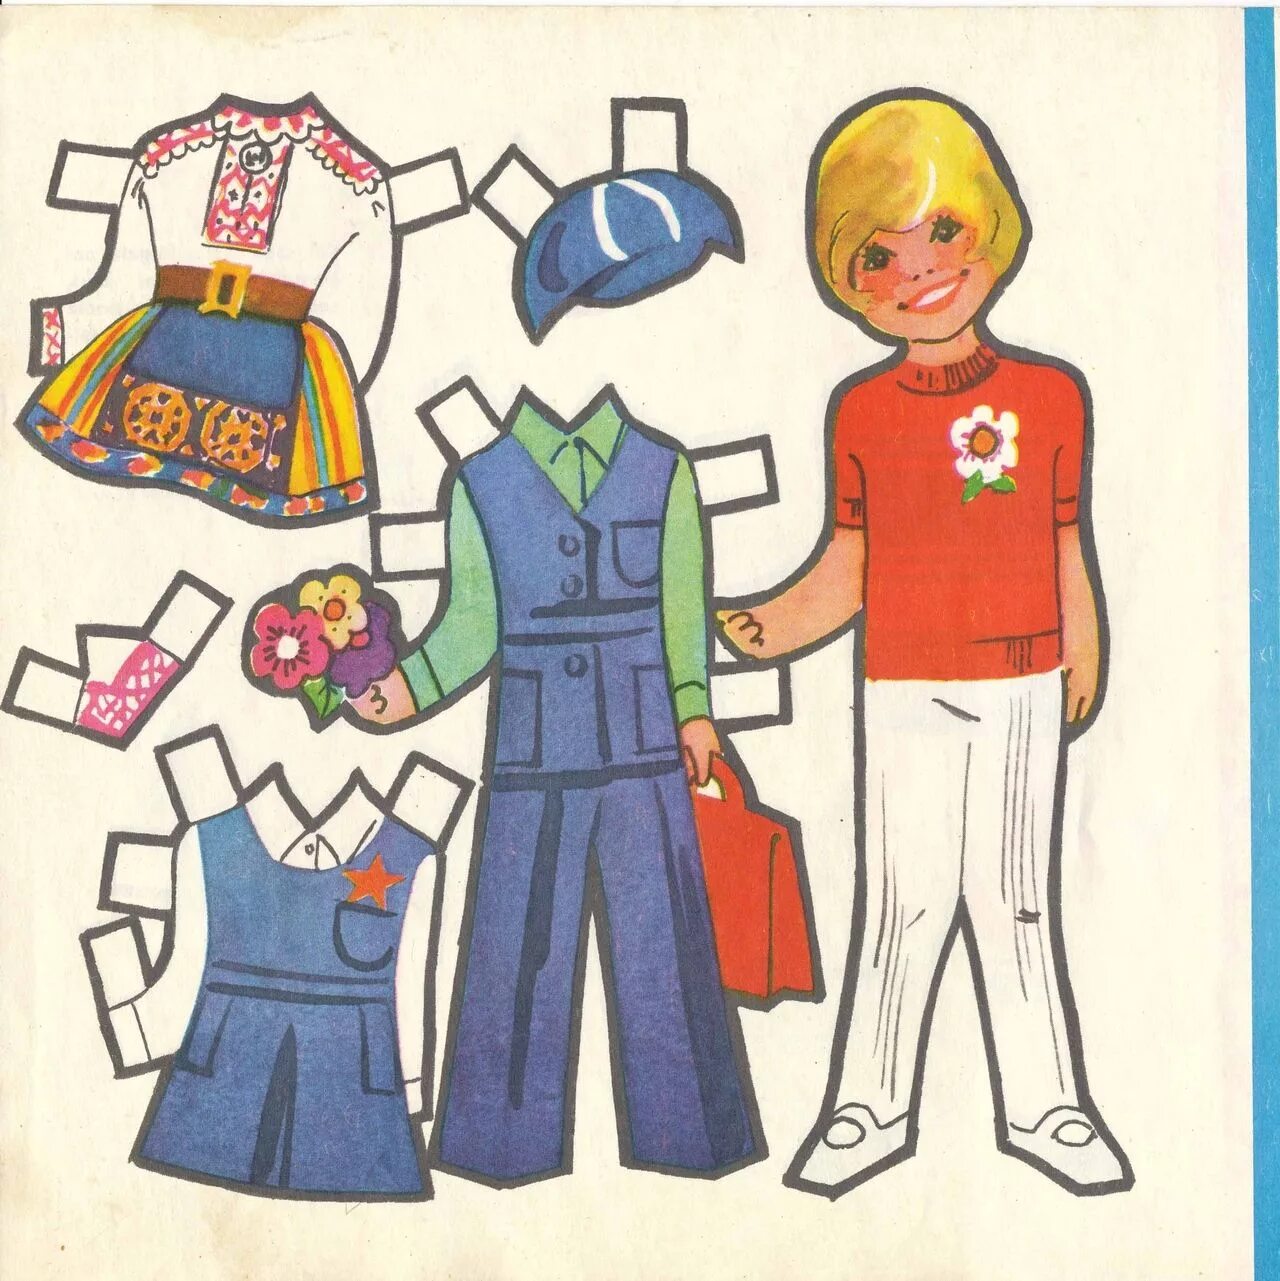 Картонные куклы с одеждой. Бумажные куклы с одеждой. Бумажный мальчик с одеждой. Школьная одежда для бумажных кукол.